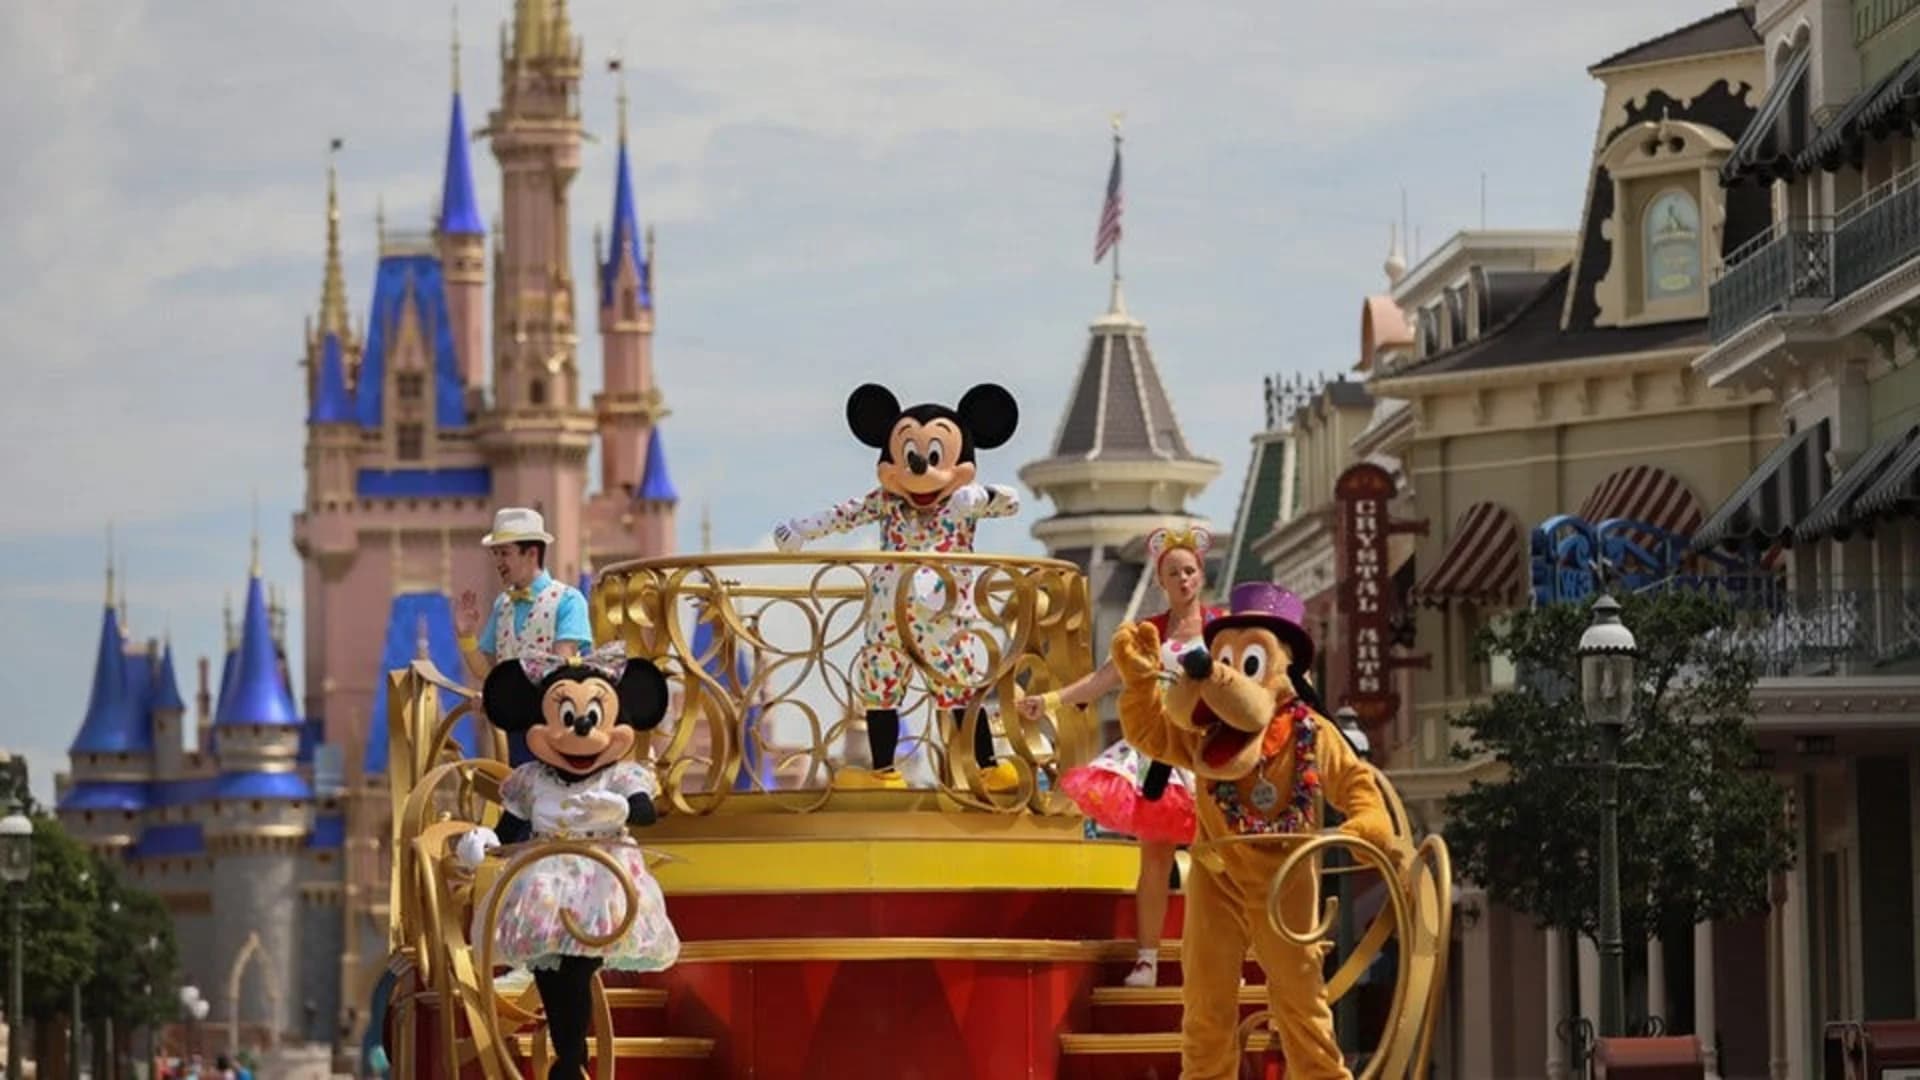 Magic returns as Disney World prepares for reopening